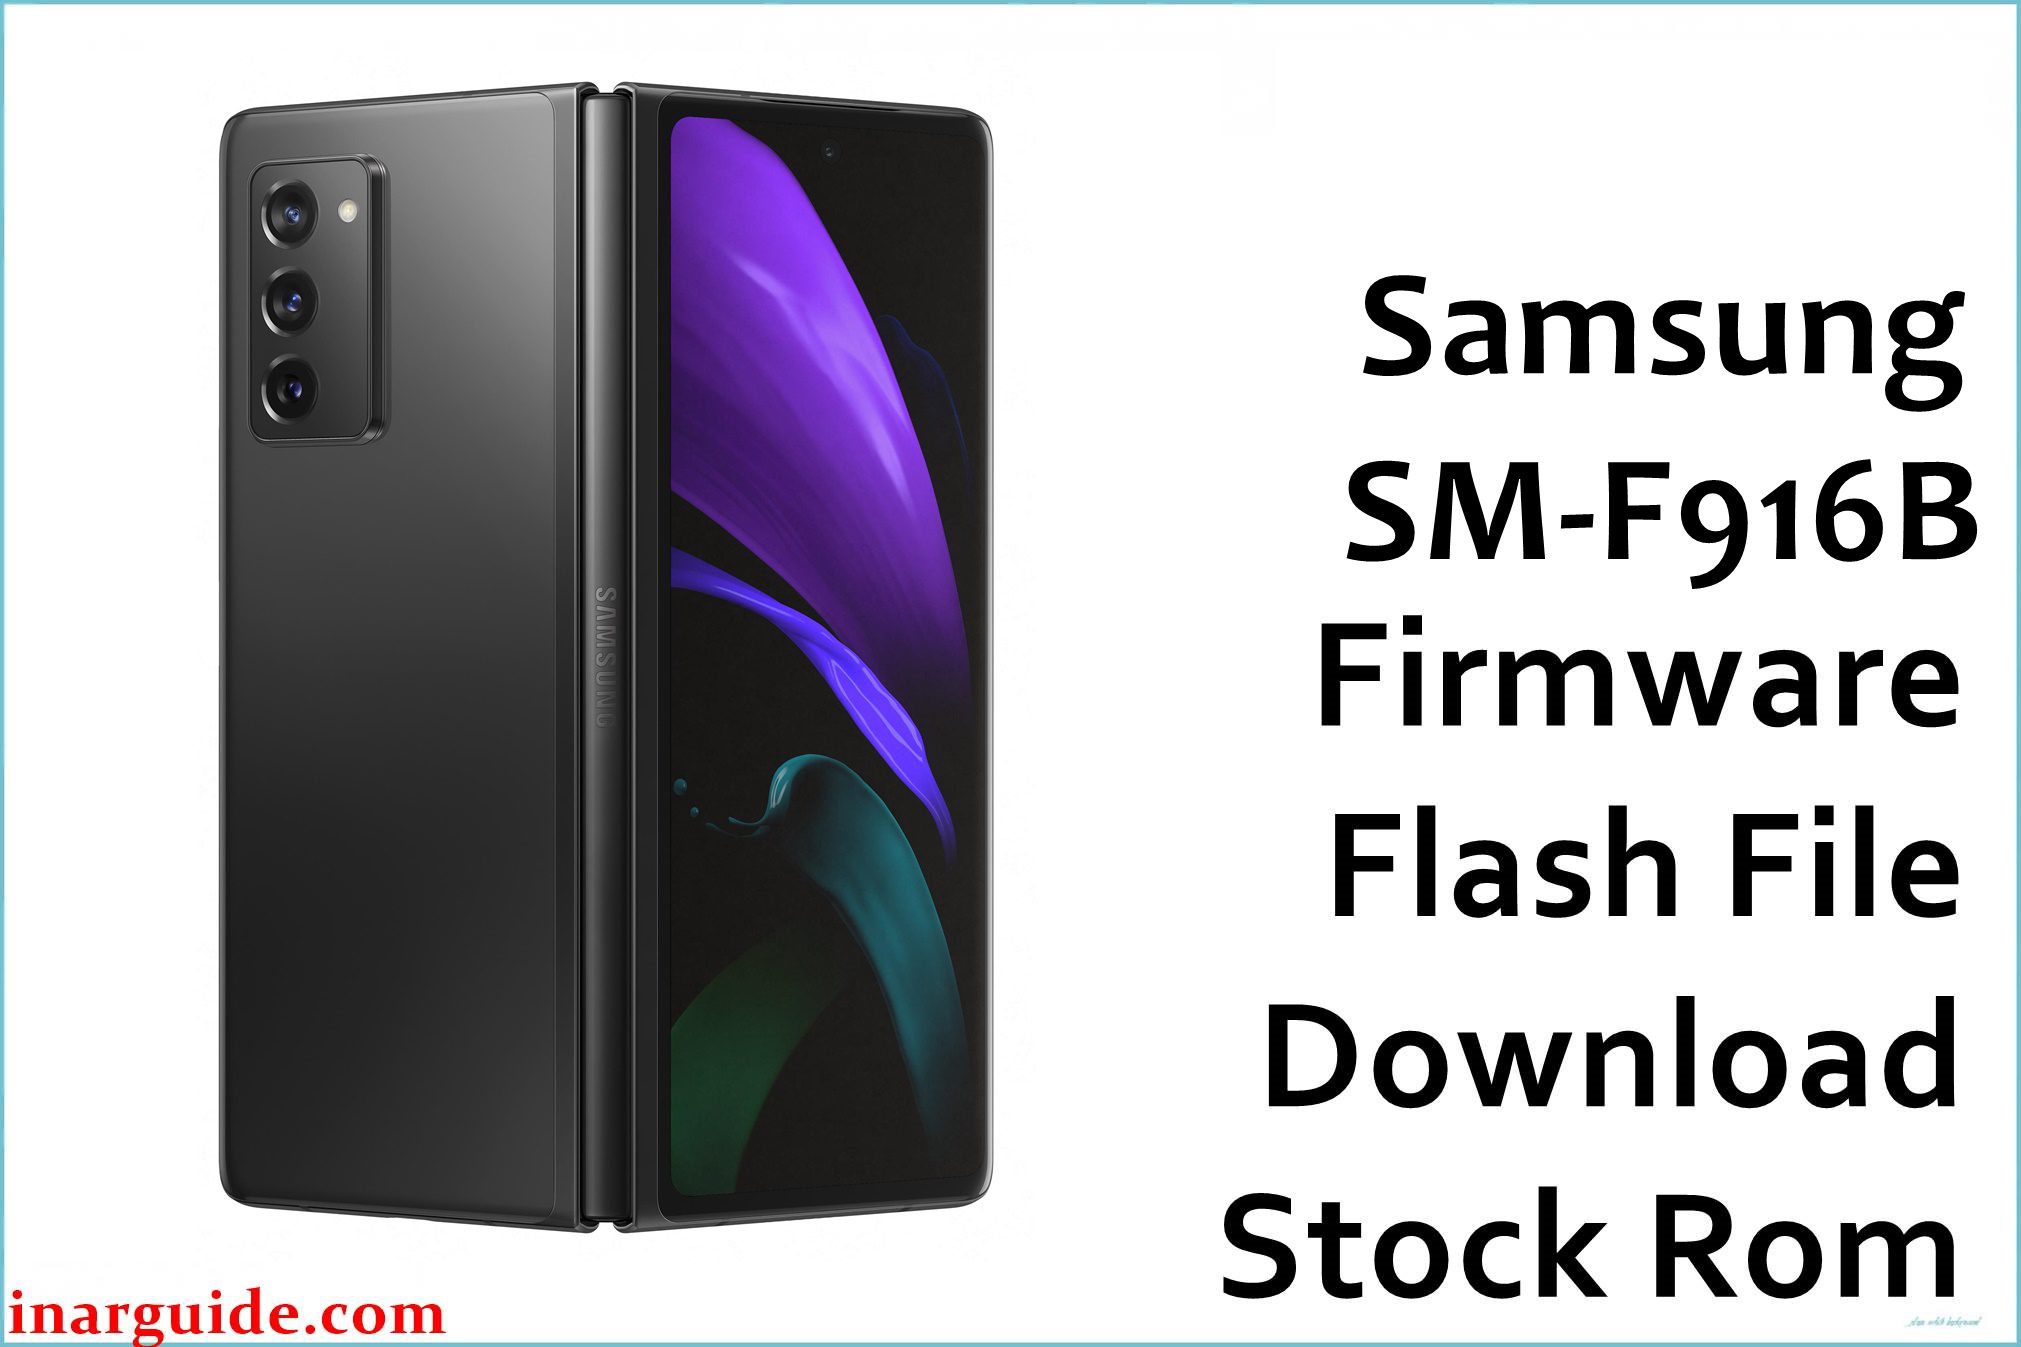 Samsung Galaxy Z Fold 2 SM-F916B